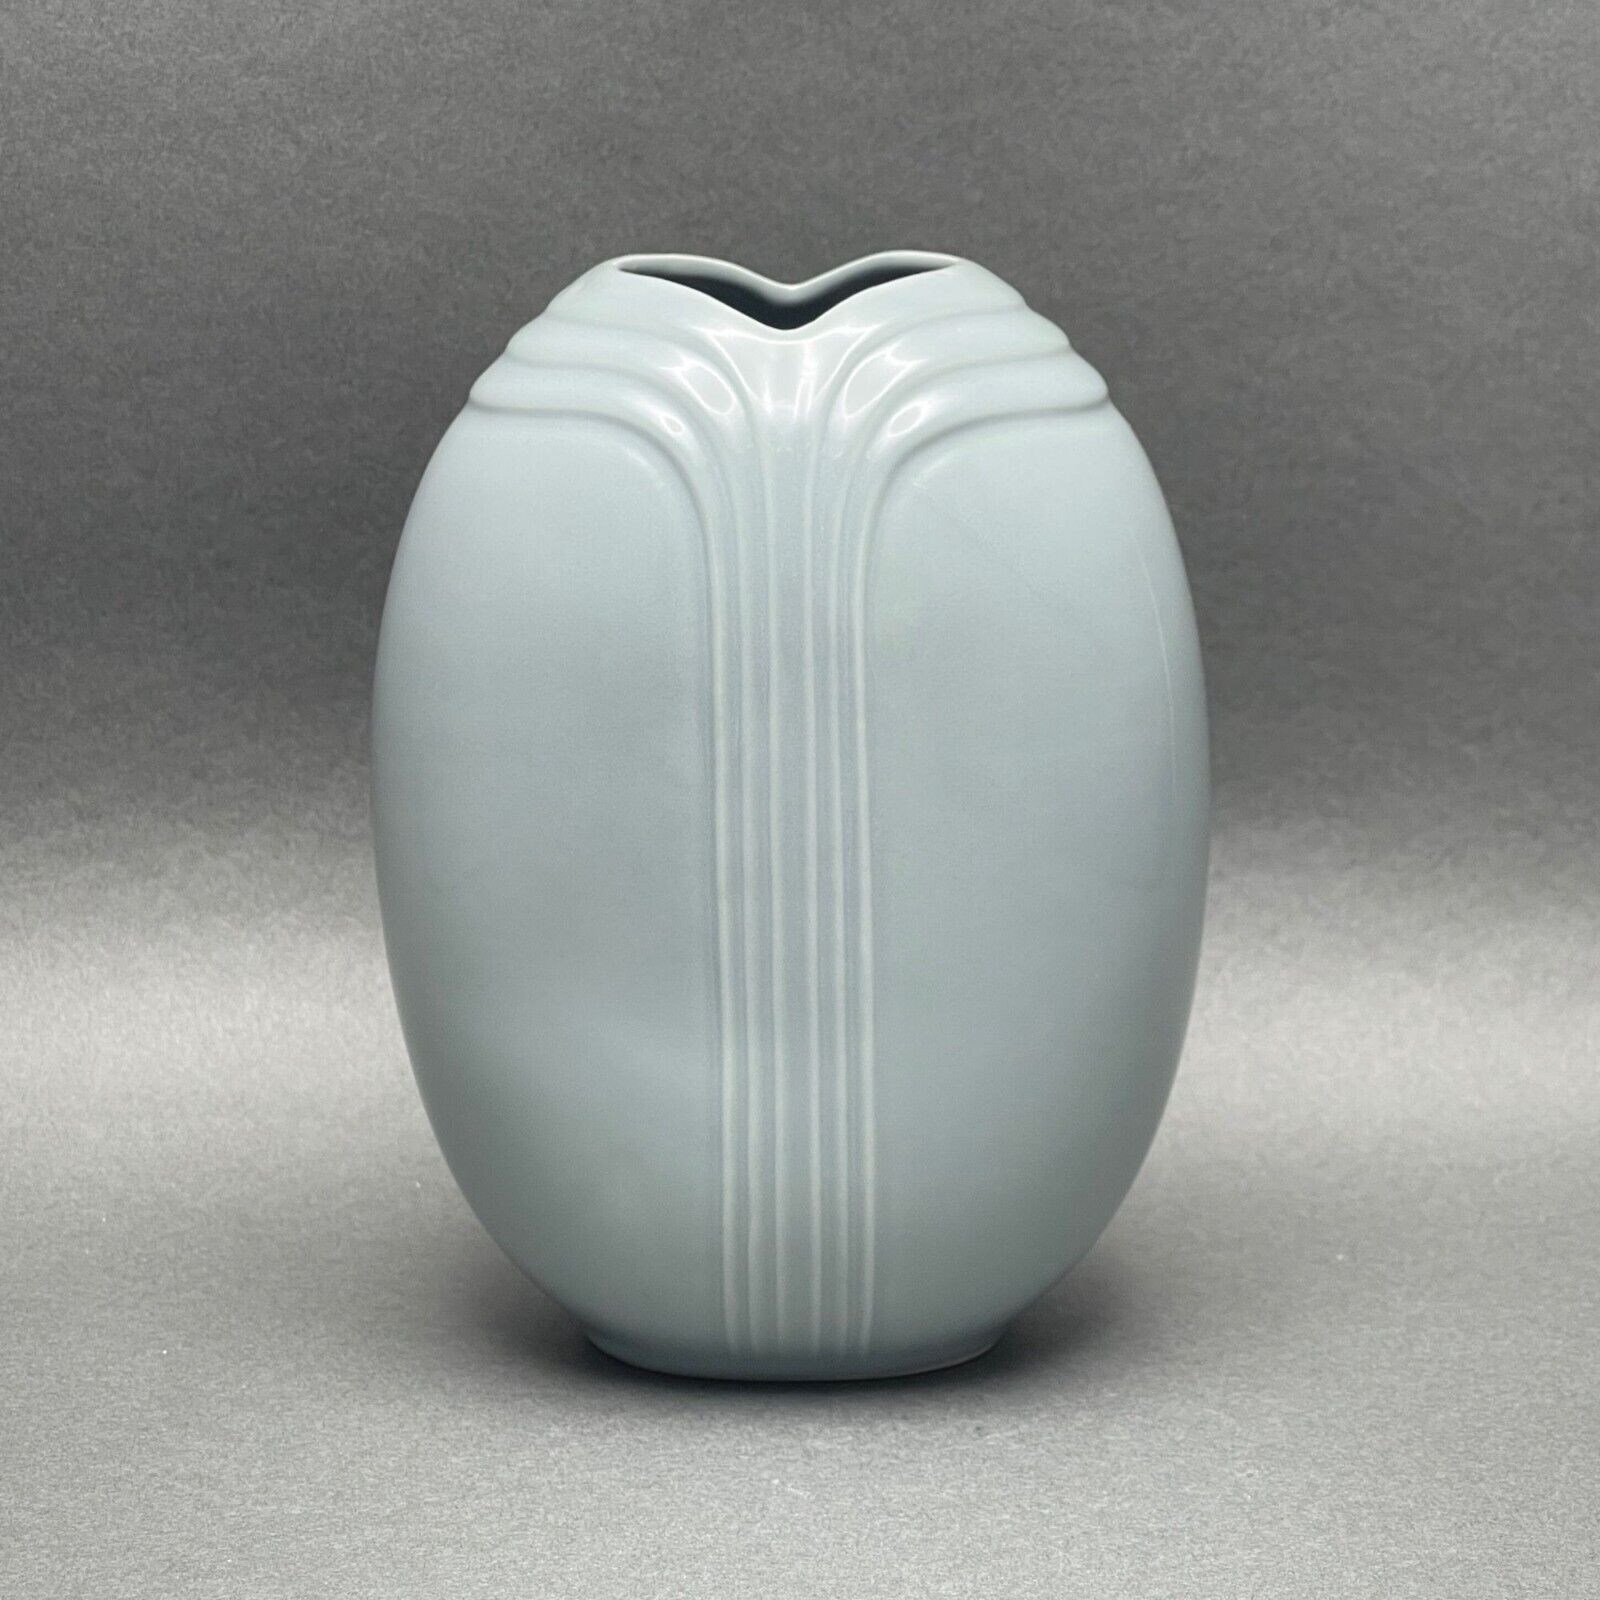 Vintage Art Deco Inspired 1980’s Pale Blue/Gray Oval Ceramic Vase